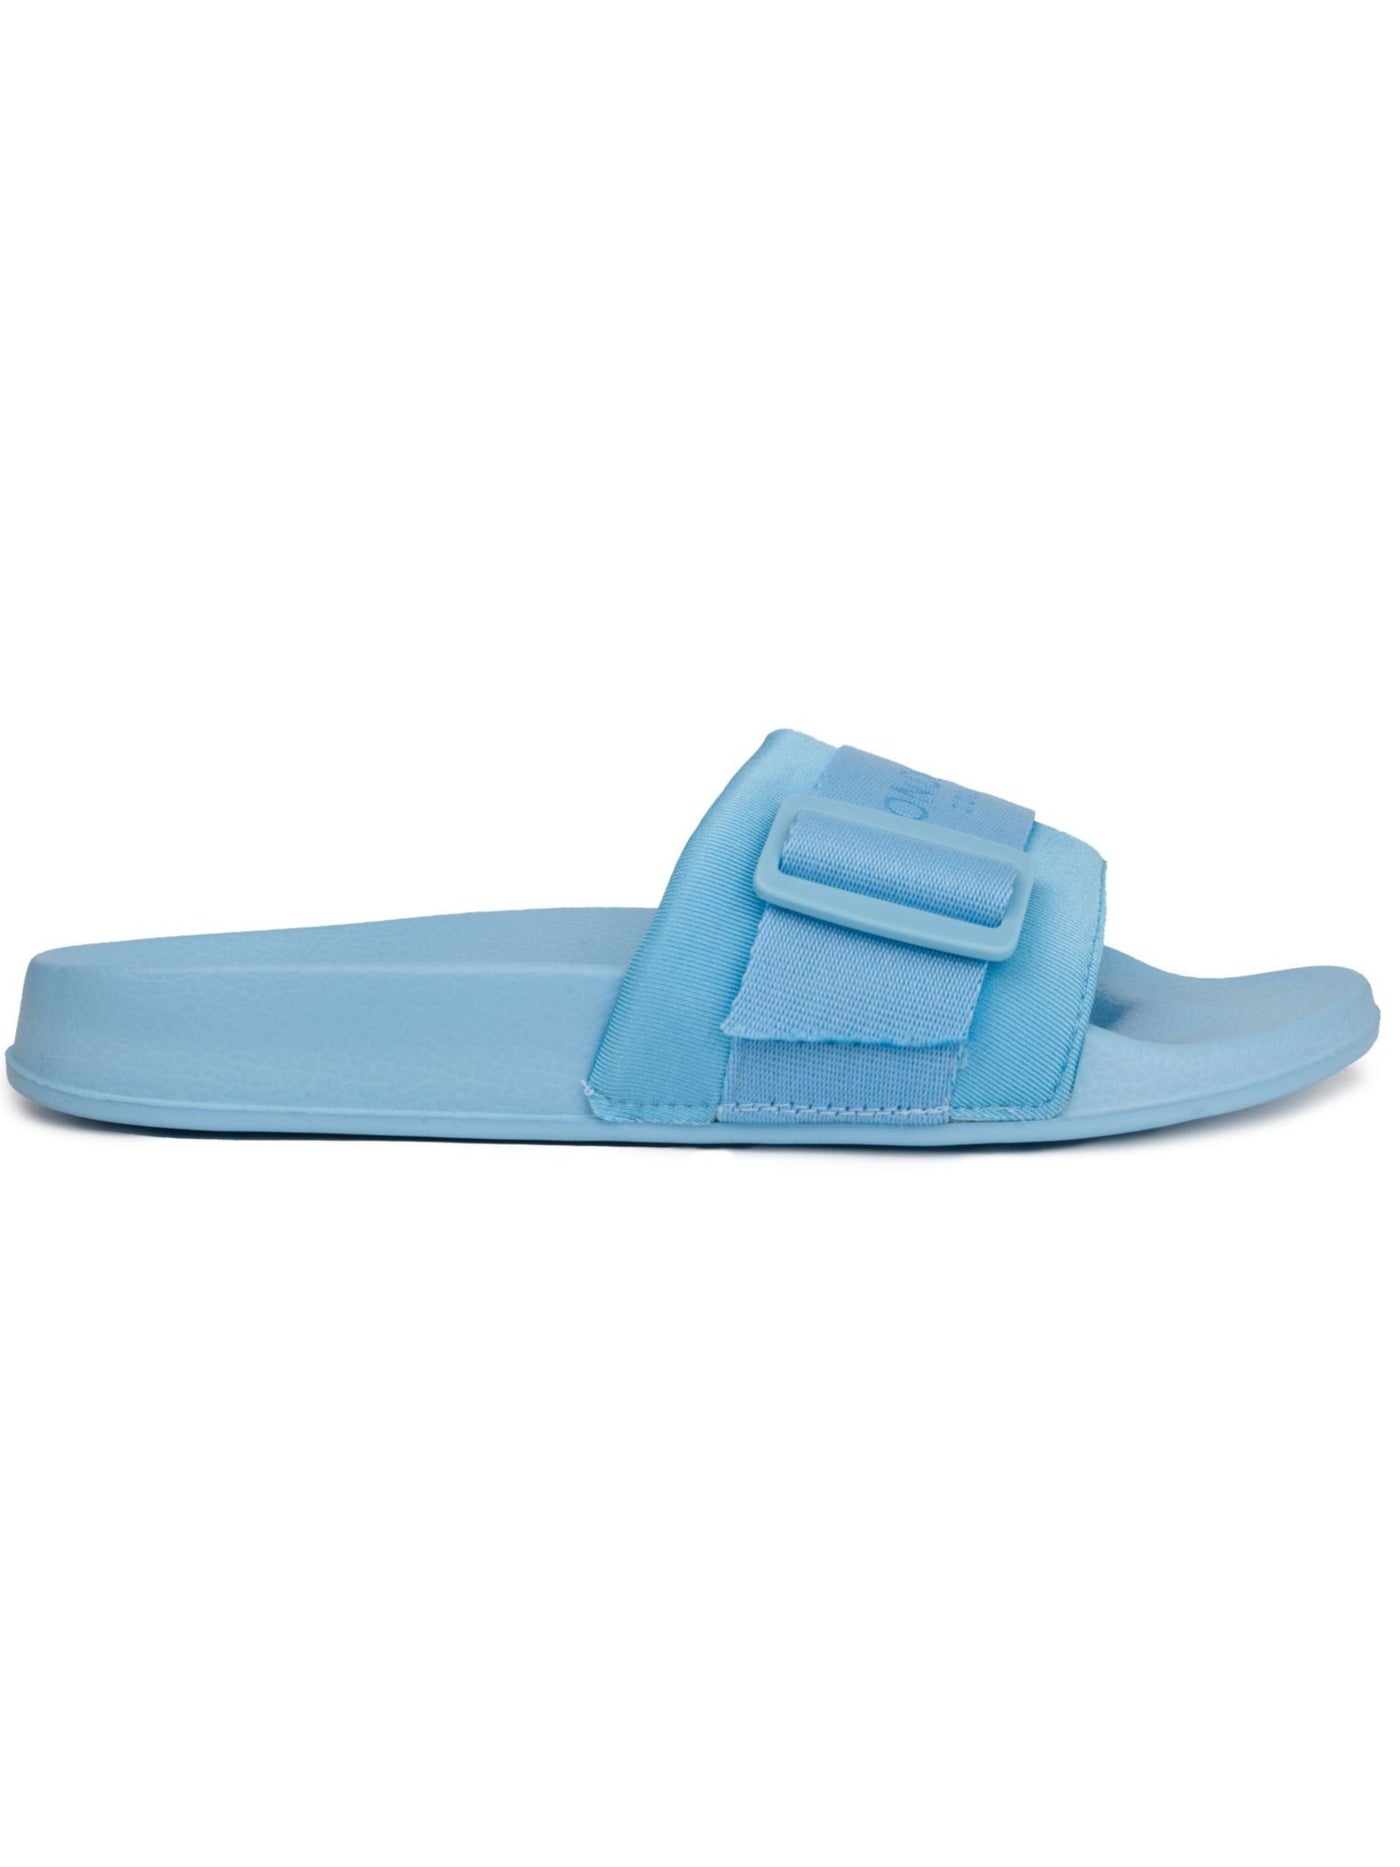 LONDON FOG Womens Turquoise Buckle Accent Logo Skyden Round Toe Platform Slip On Slide Sandals Shoes 6 M